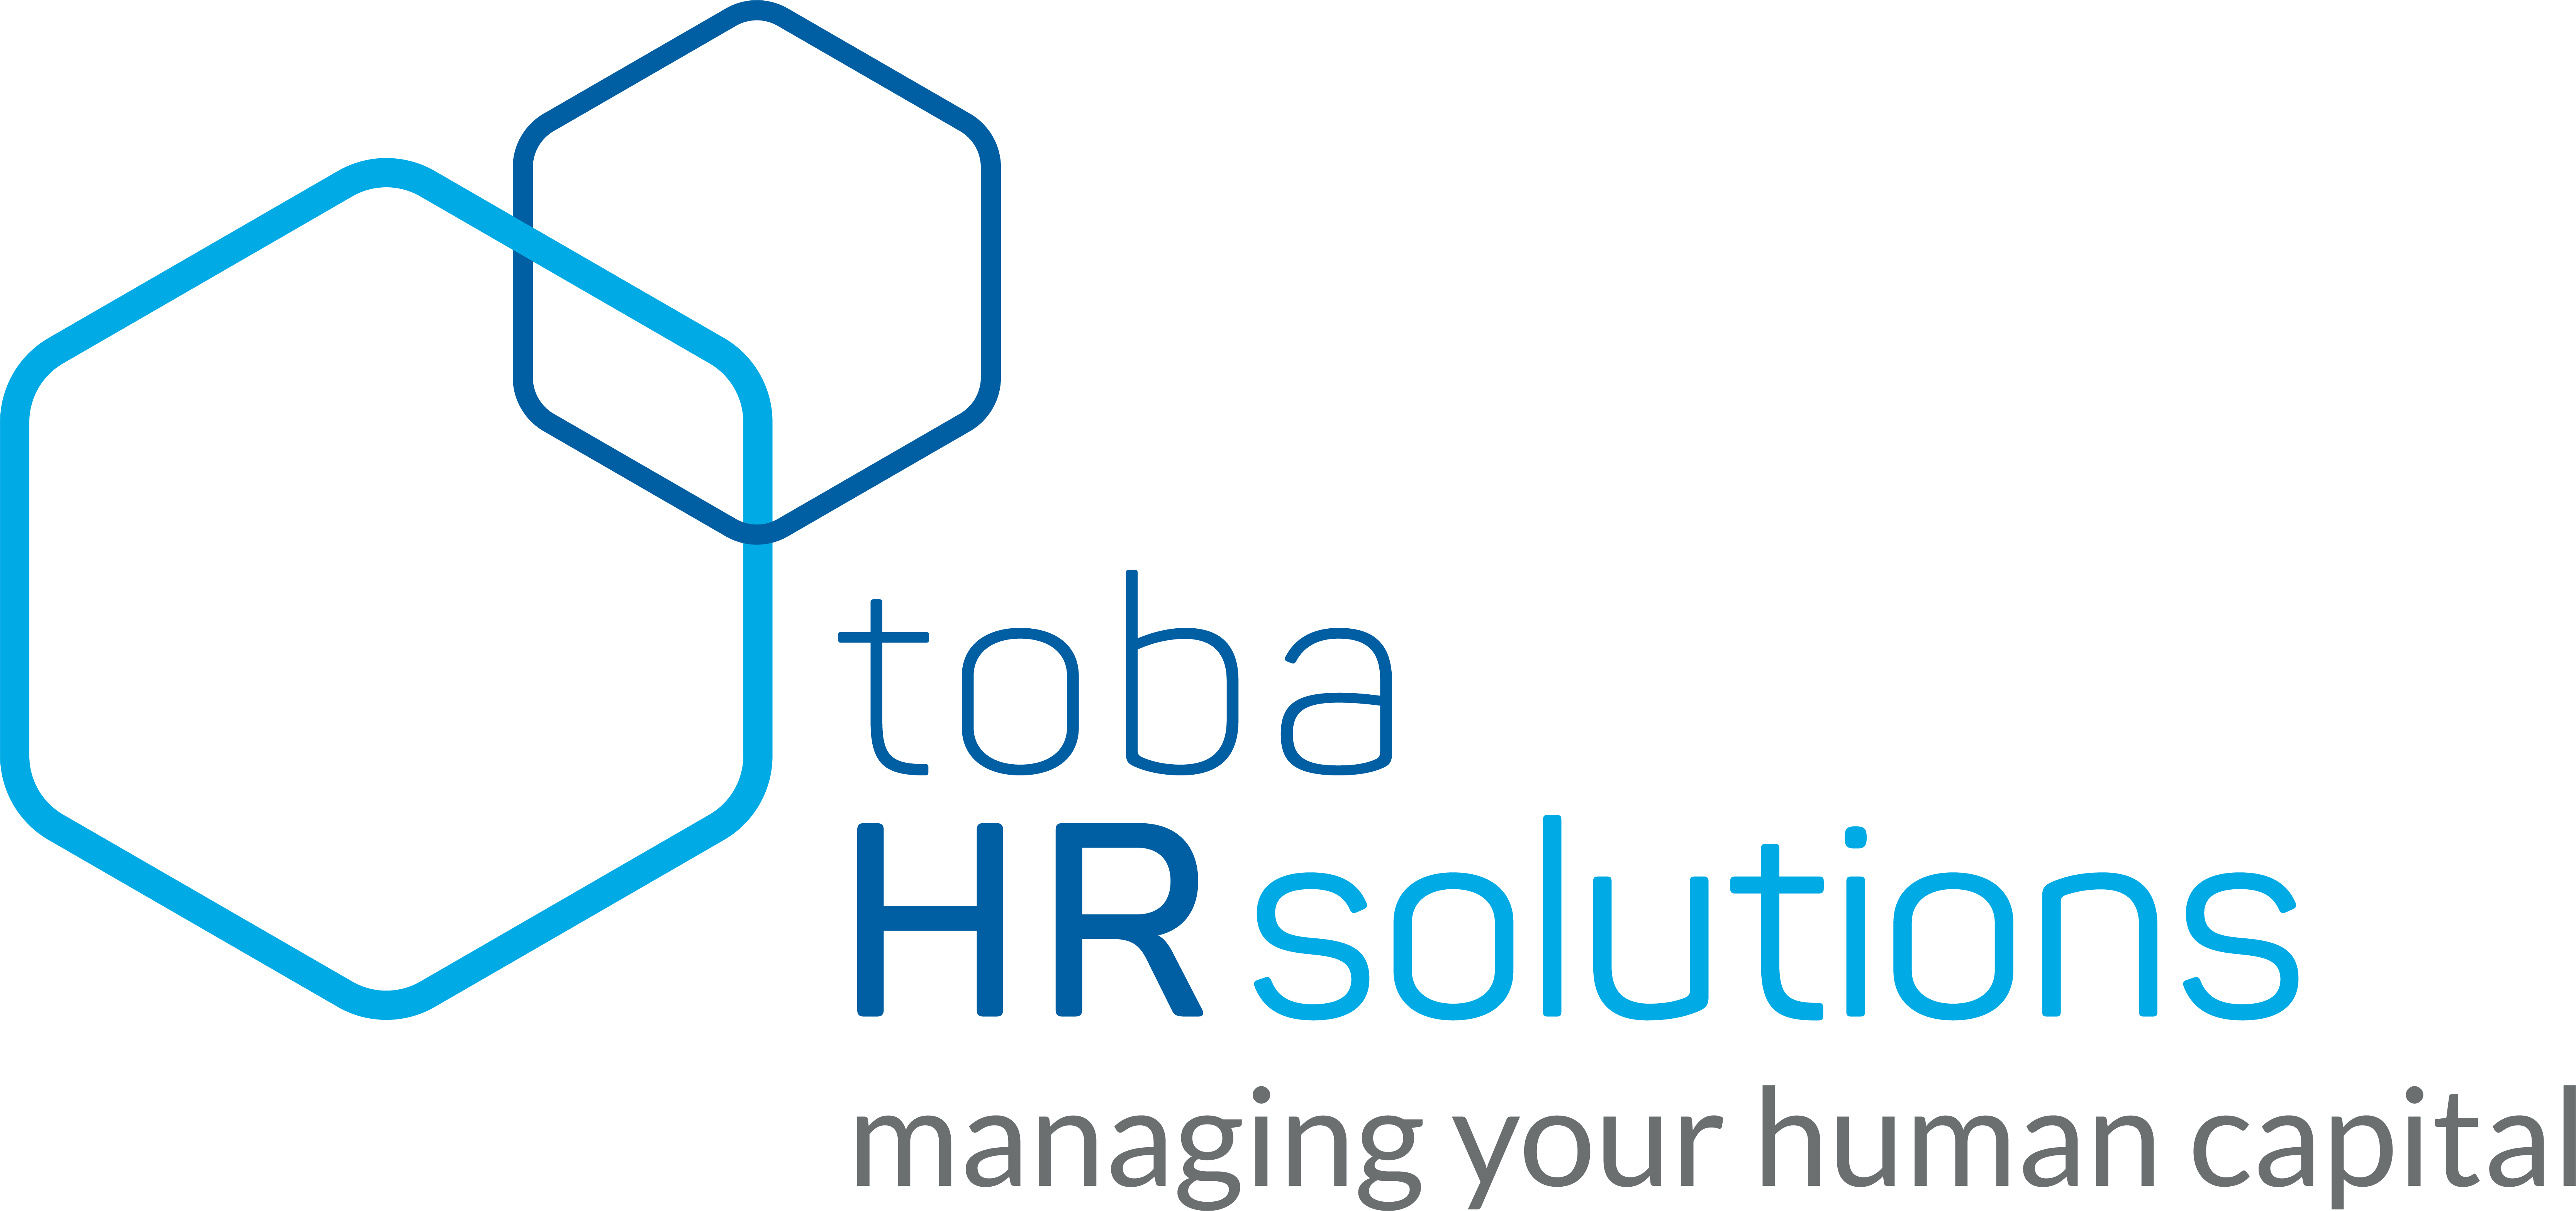 Toba HR Solutions